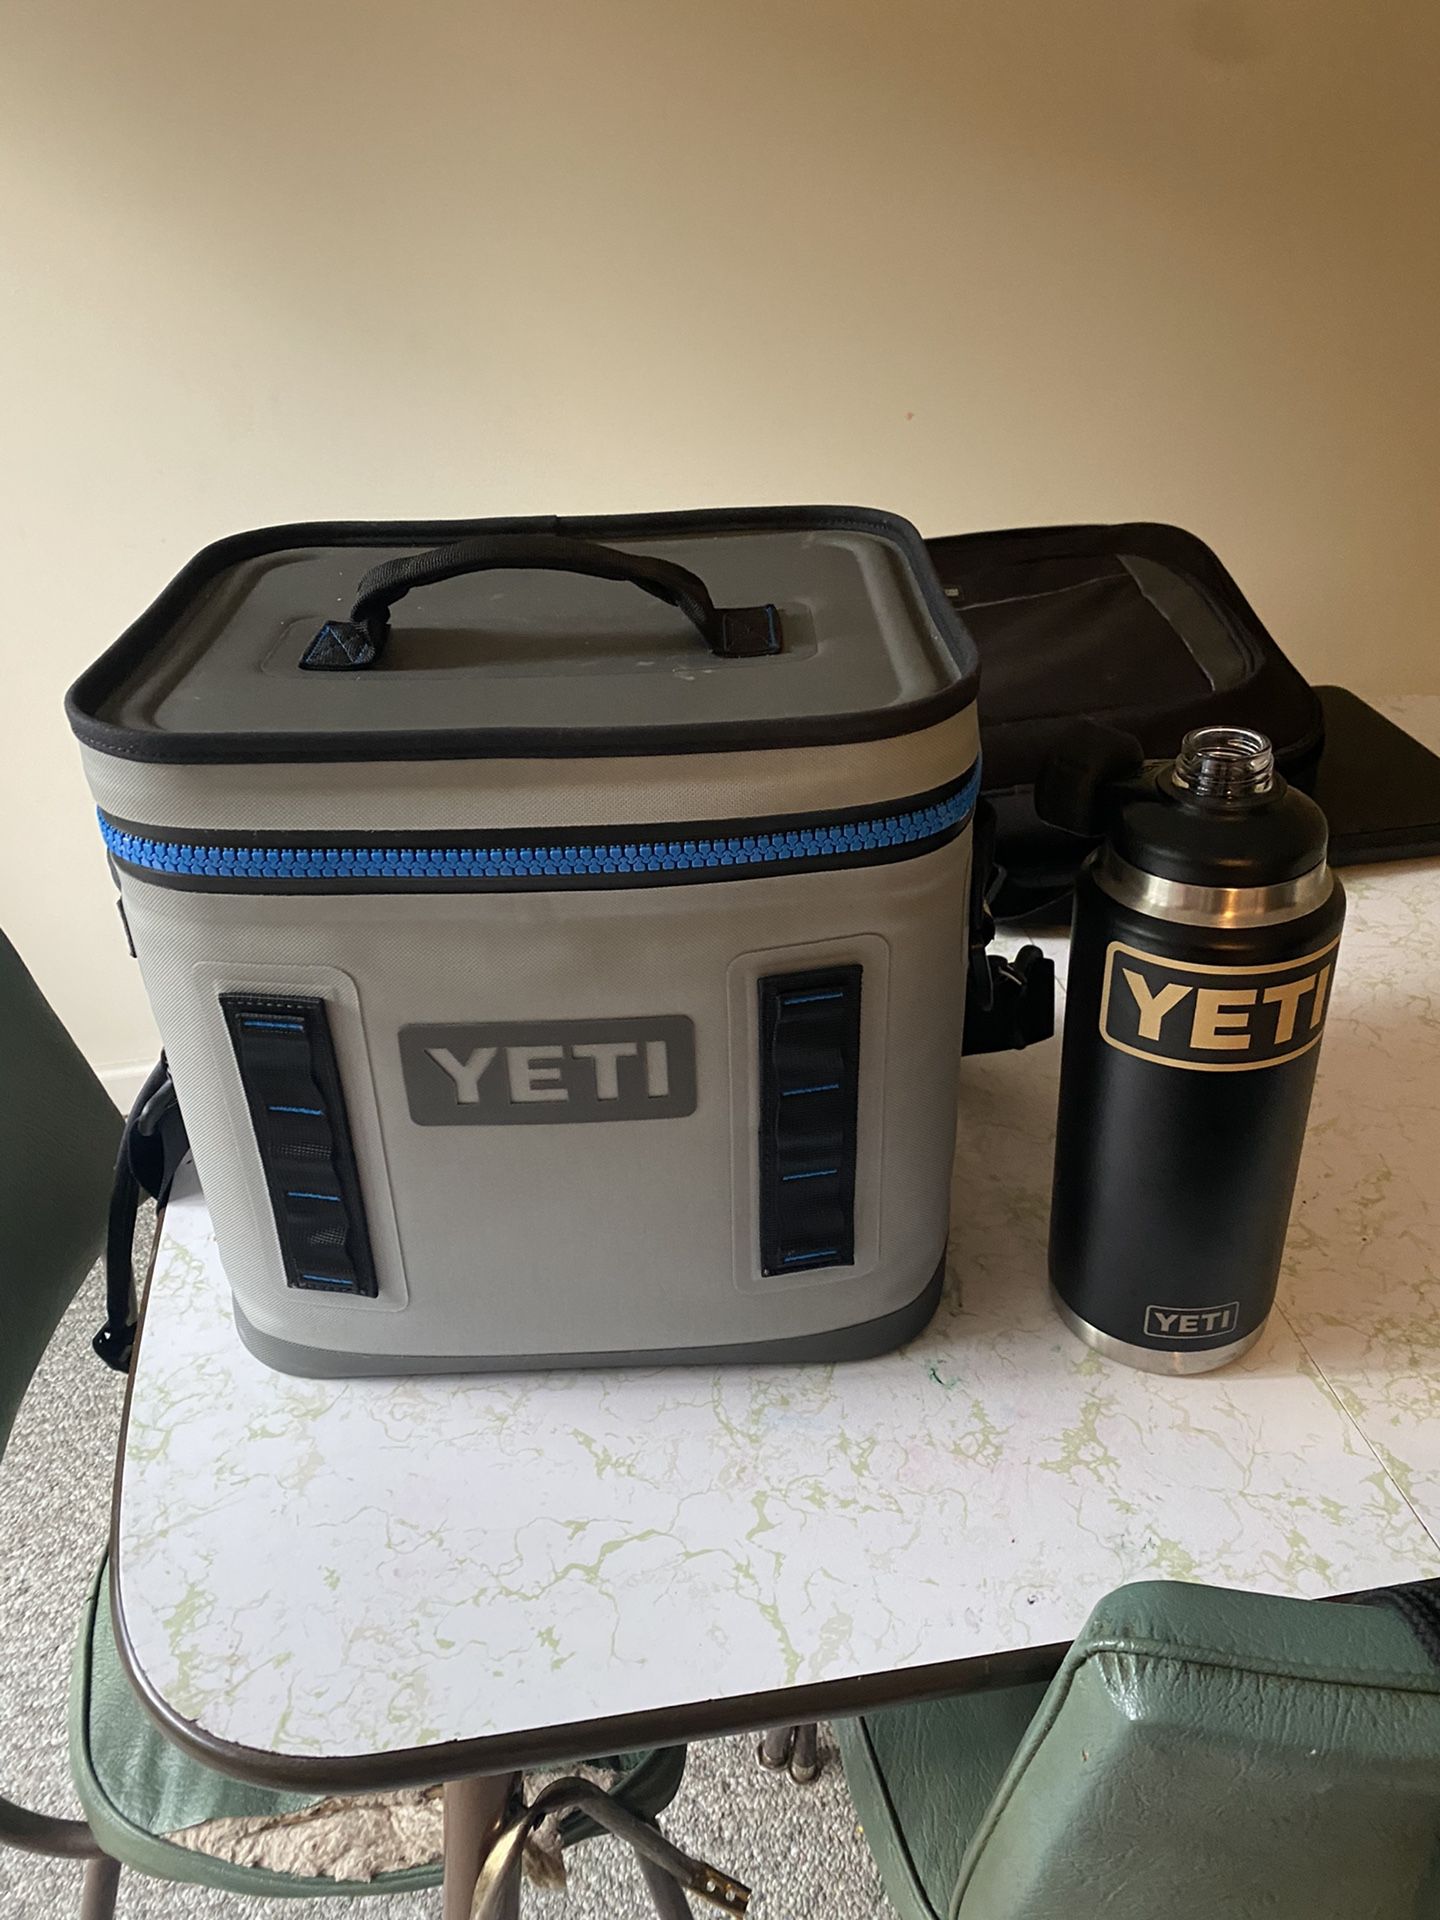 YETI Products